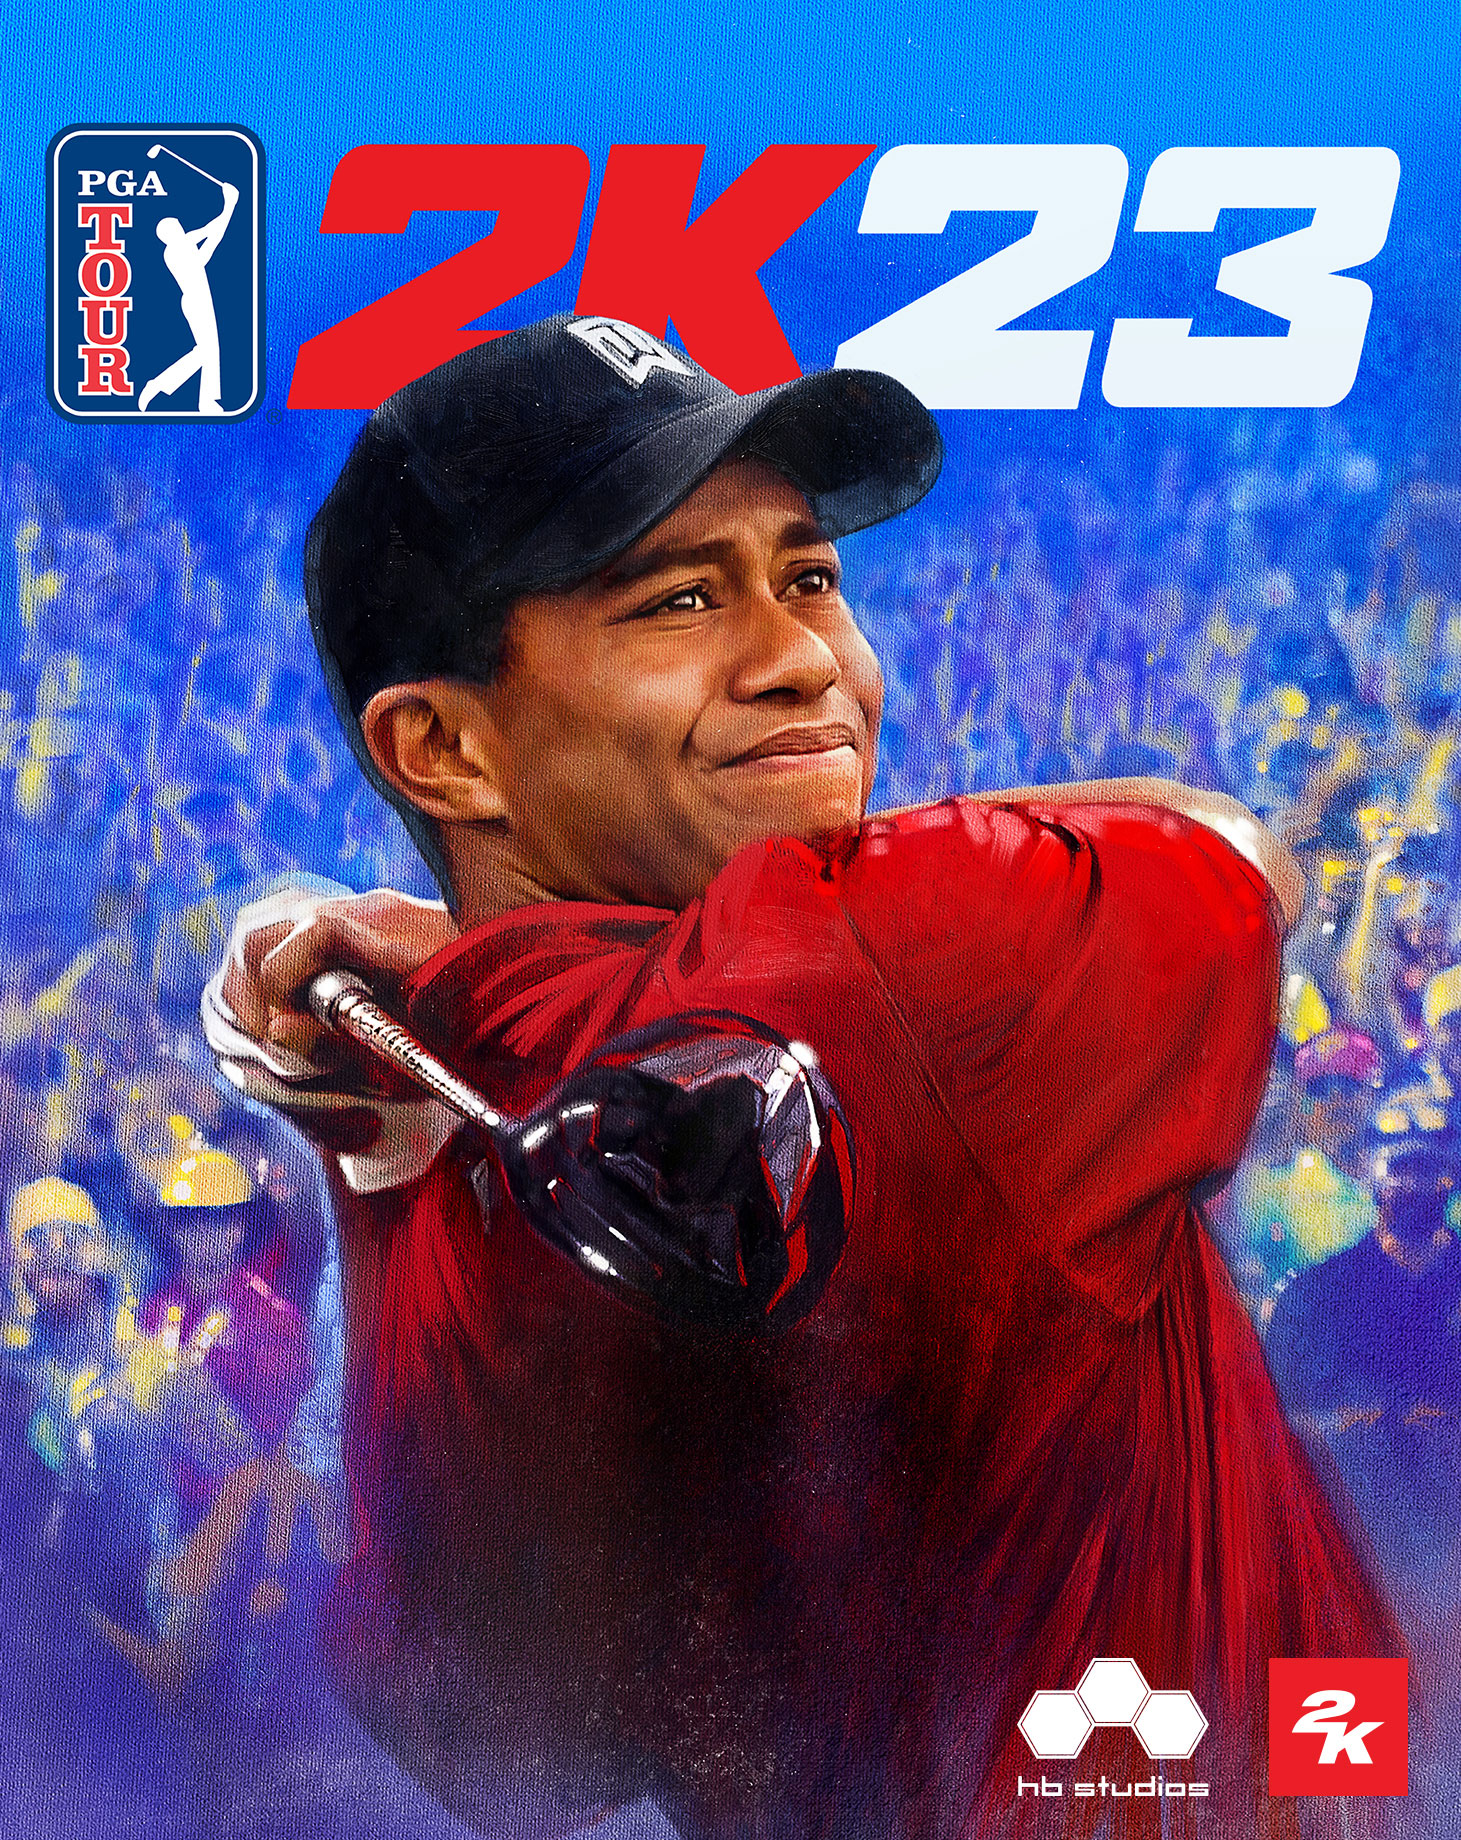 《PGA巡迴賽 2K23》公佈封面人物為「老虎」伍茲